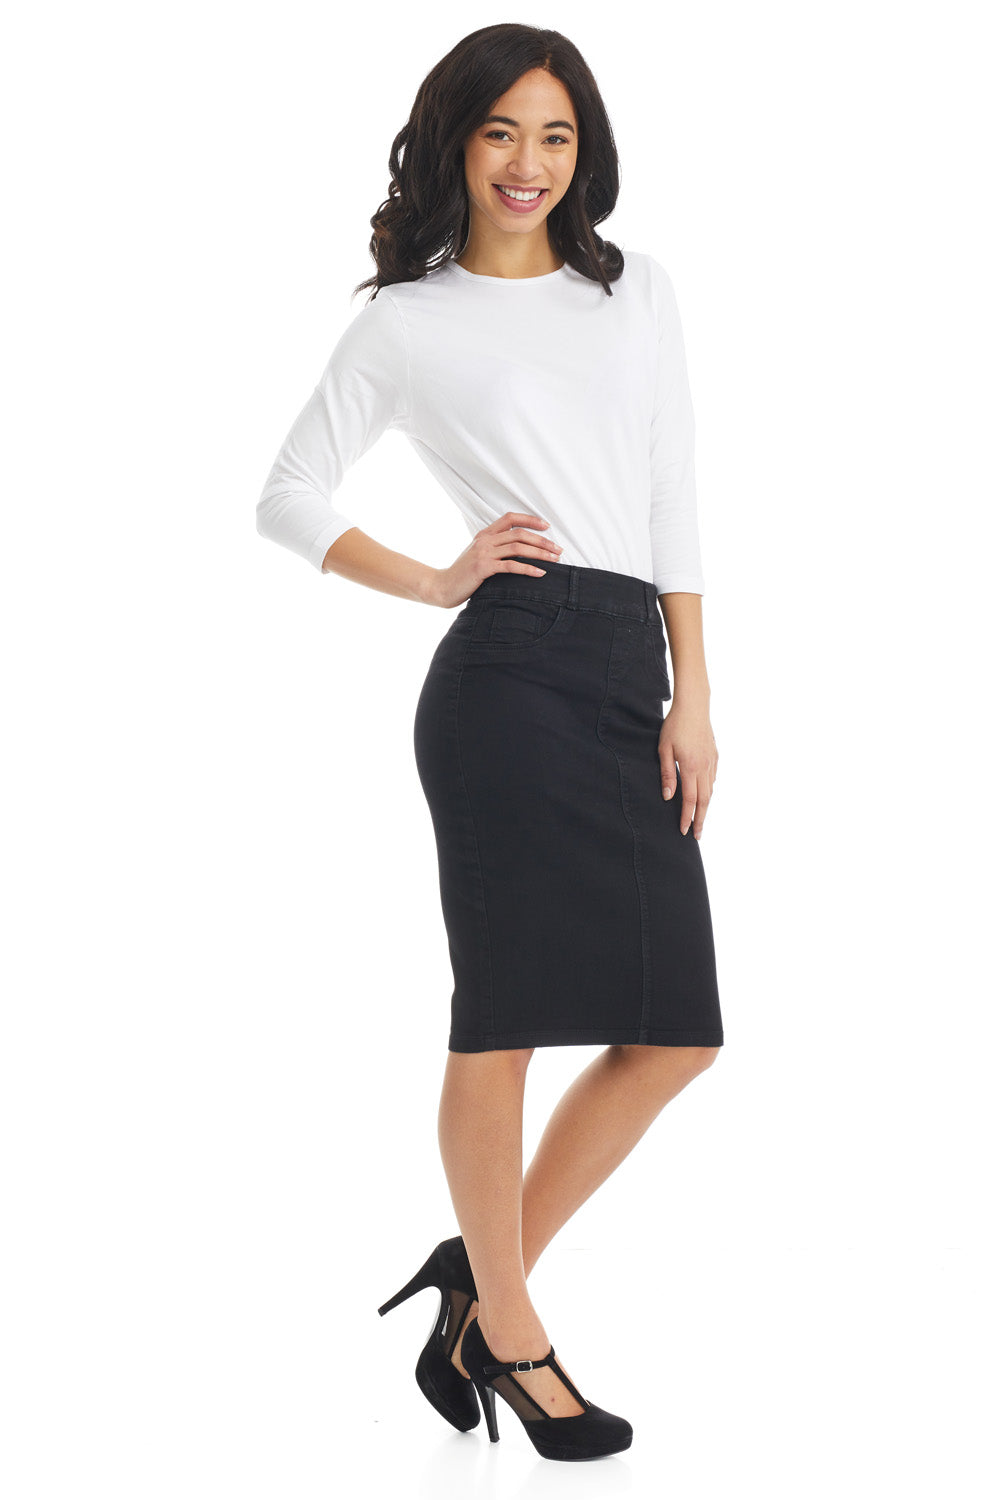 Esteez BROOKLYN Denim Skirt - Below the knee Jean Skirt for women - Black